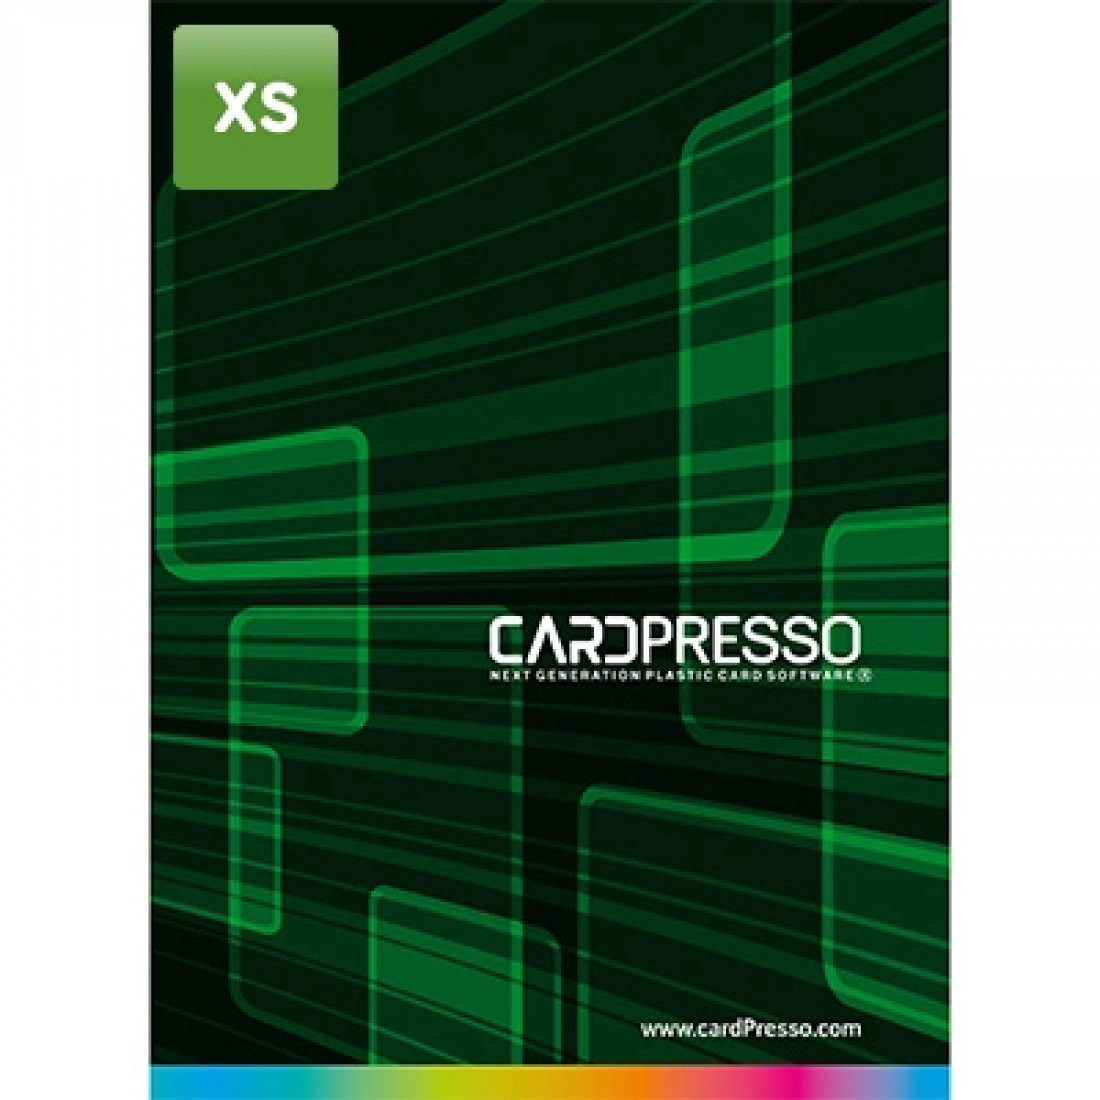 cardpresso .com